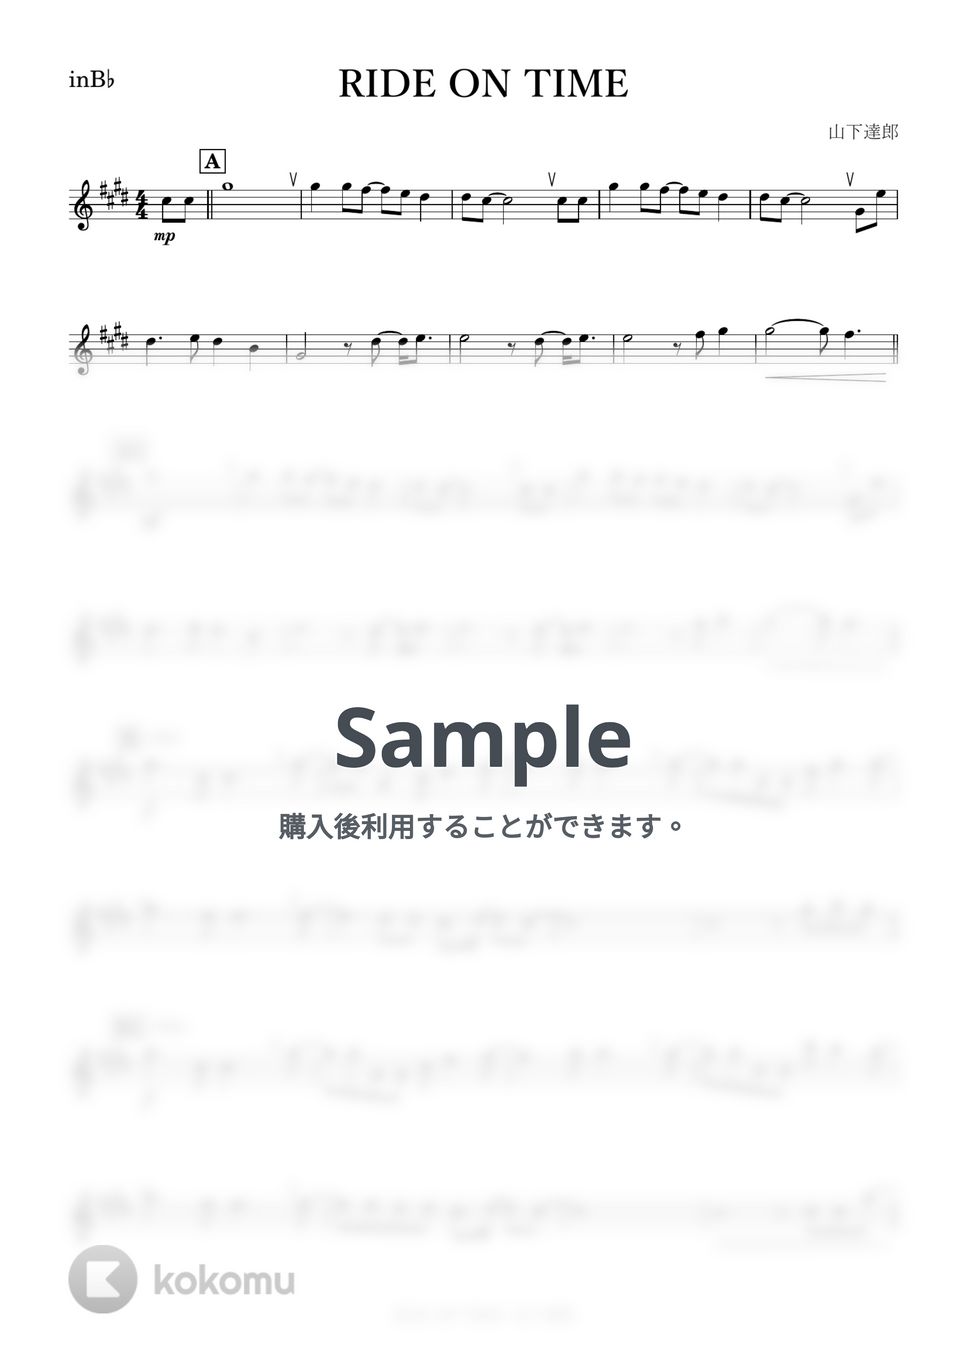 山下達郎 - RIDE ON TIME (B♭) by kanamusic